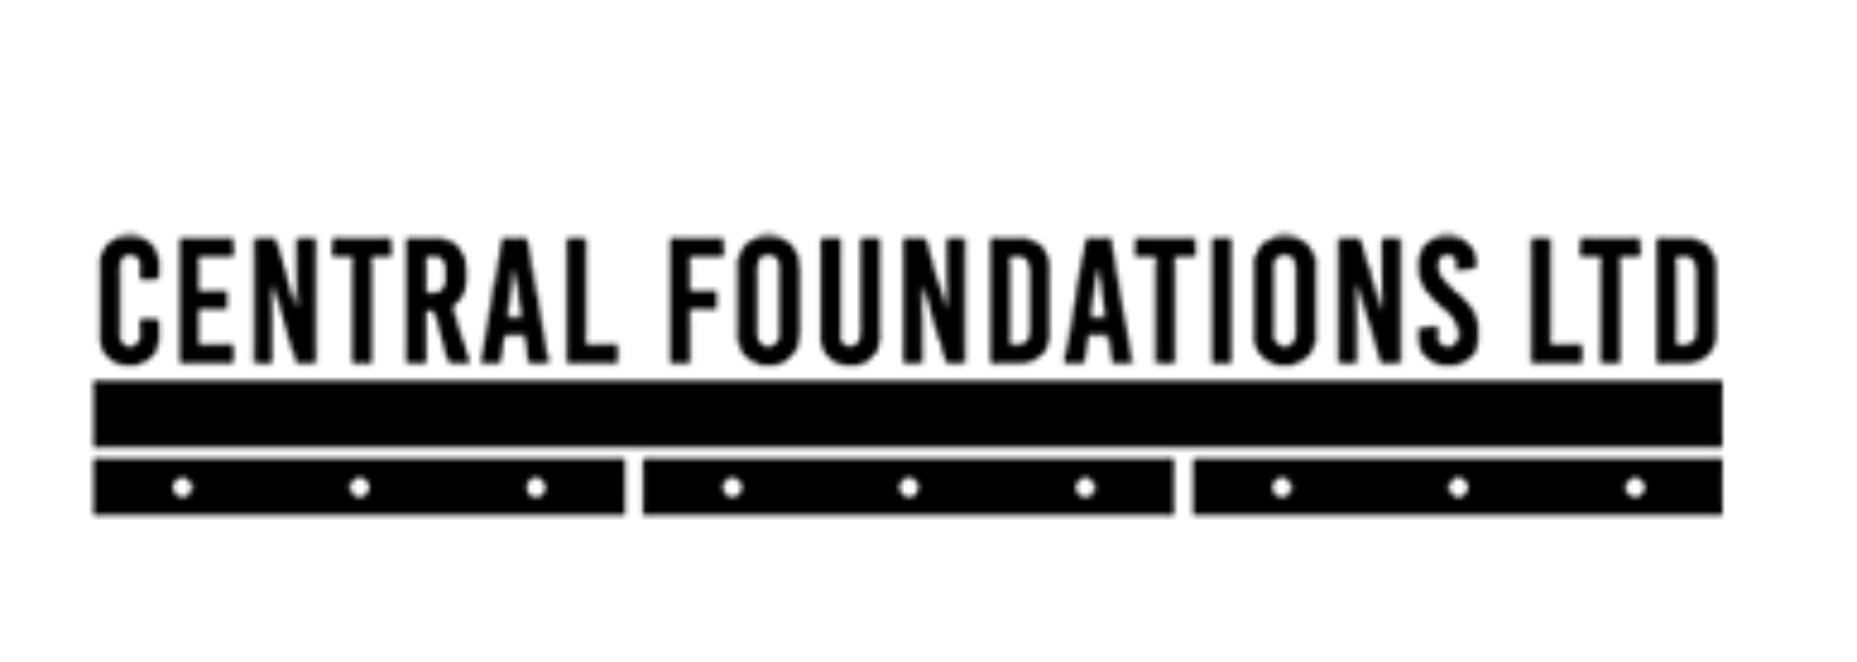 Central Foundations Ltd